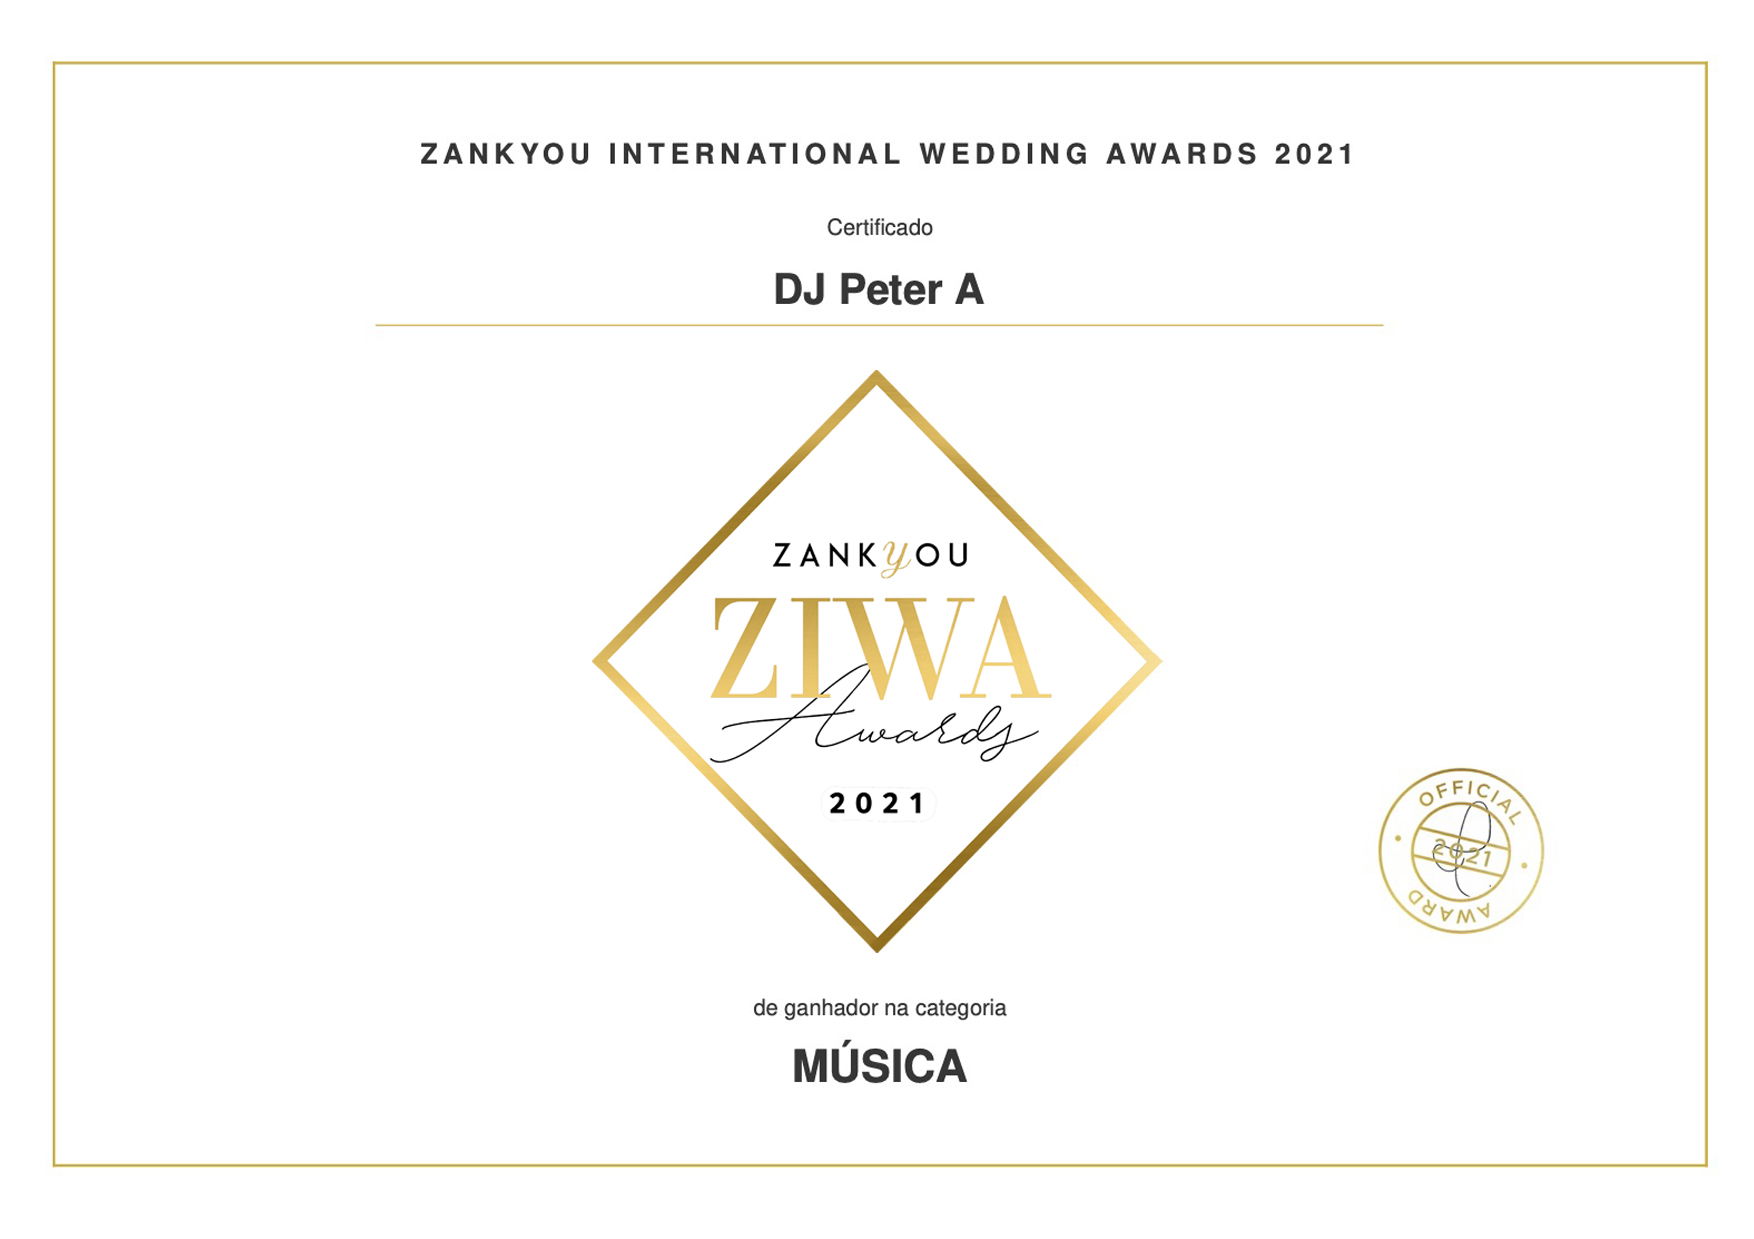 Ziwa Awards 2021 - DJ Peter A - Zankyou.pt 🏆